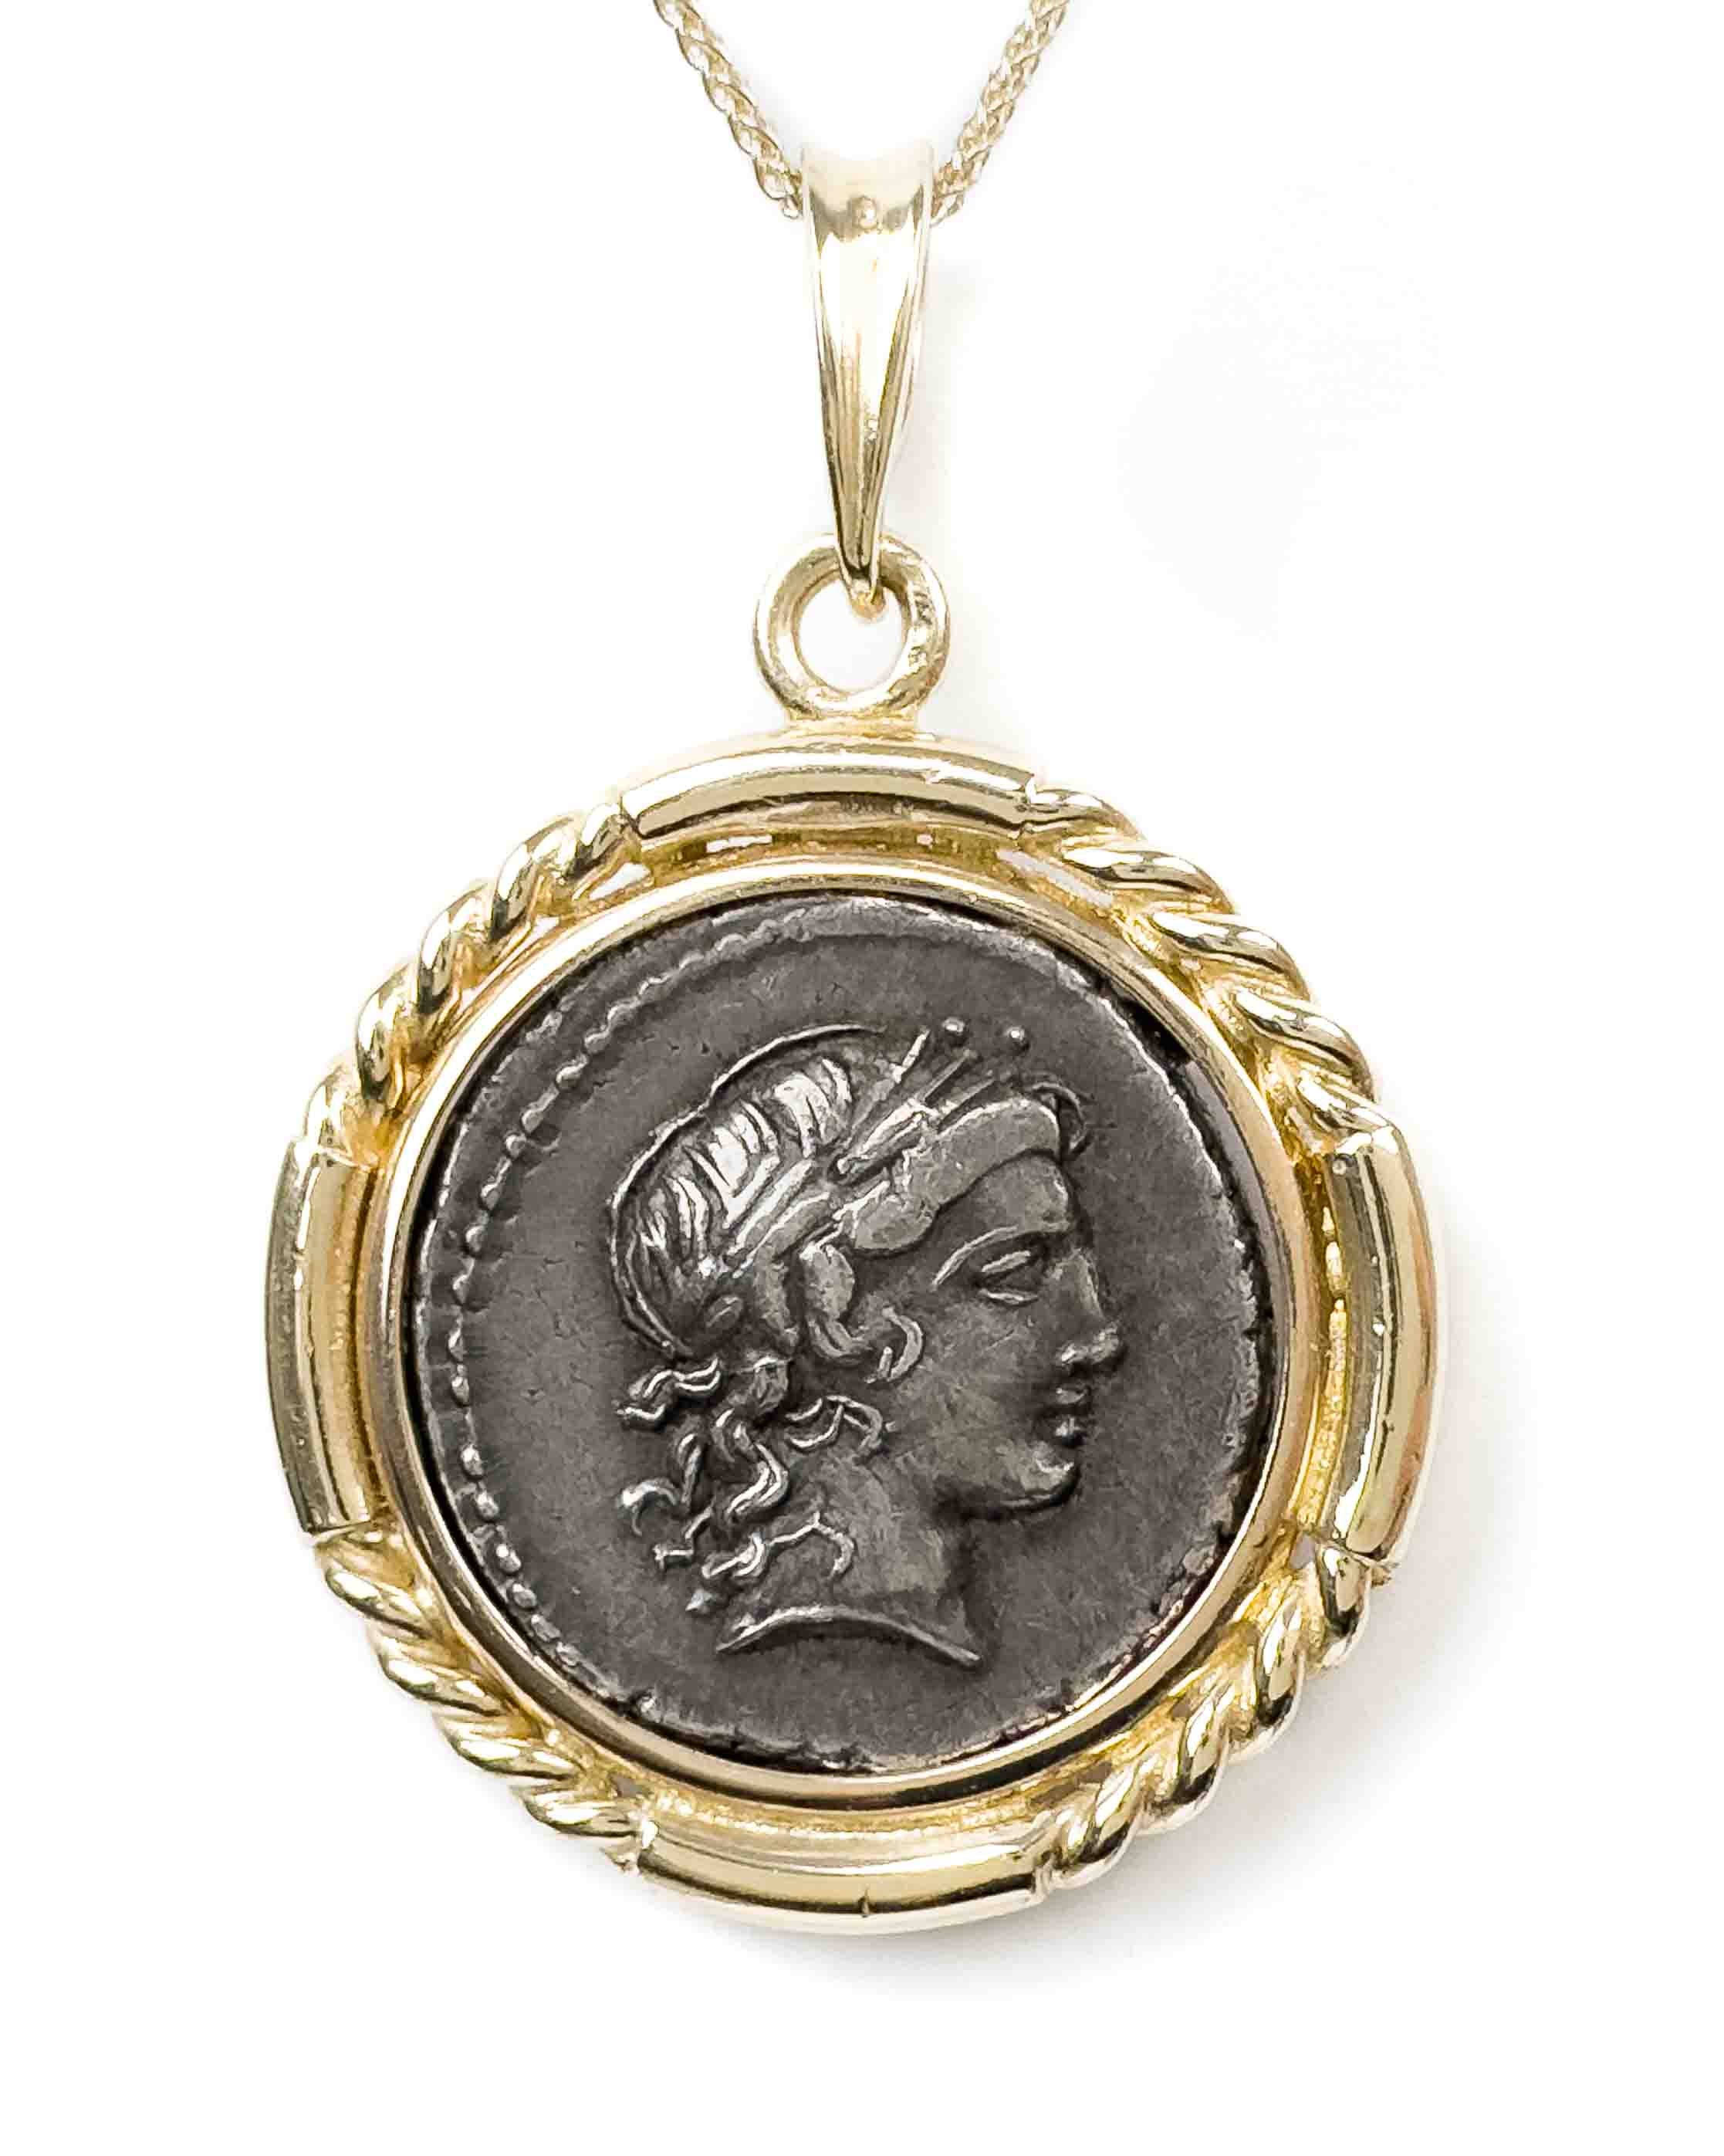 ancient roman gold necklace